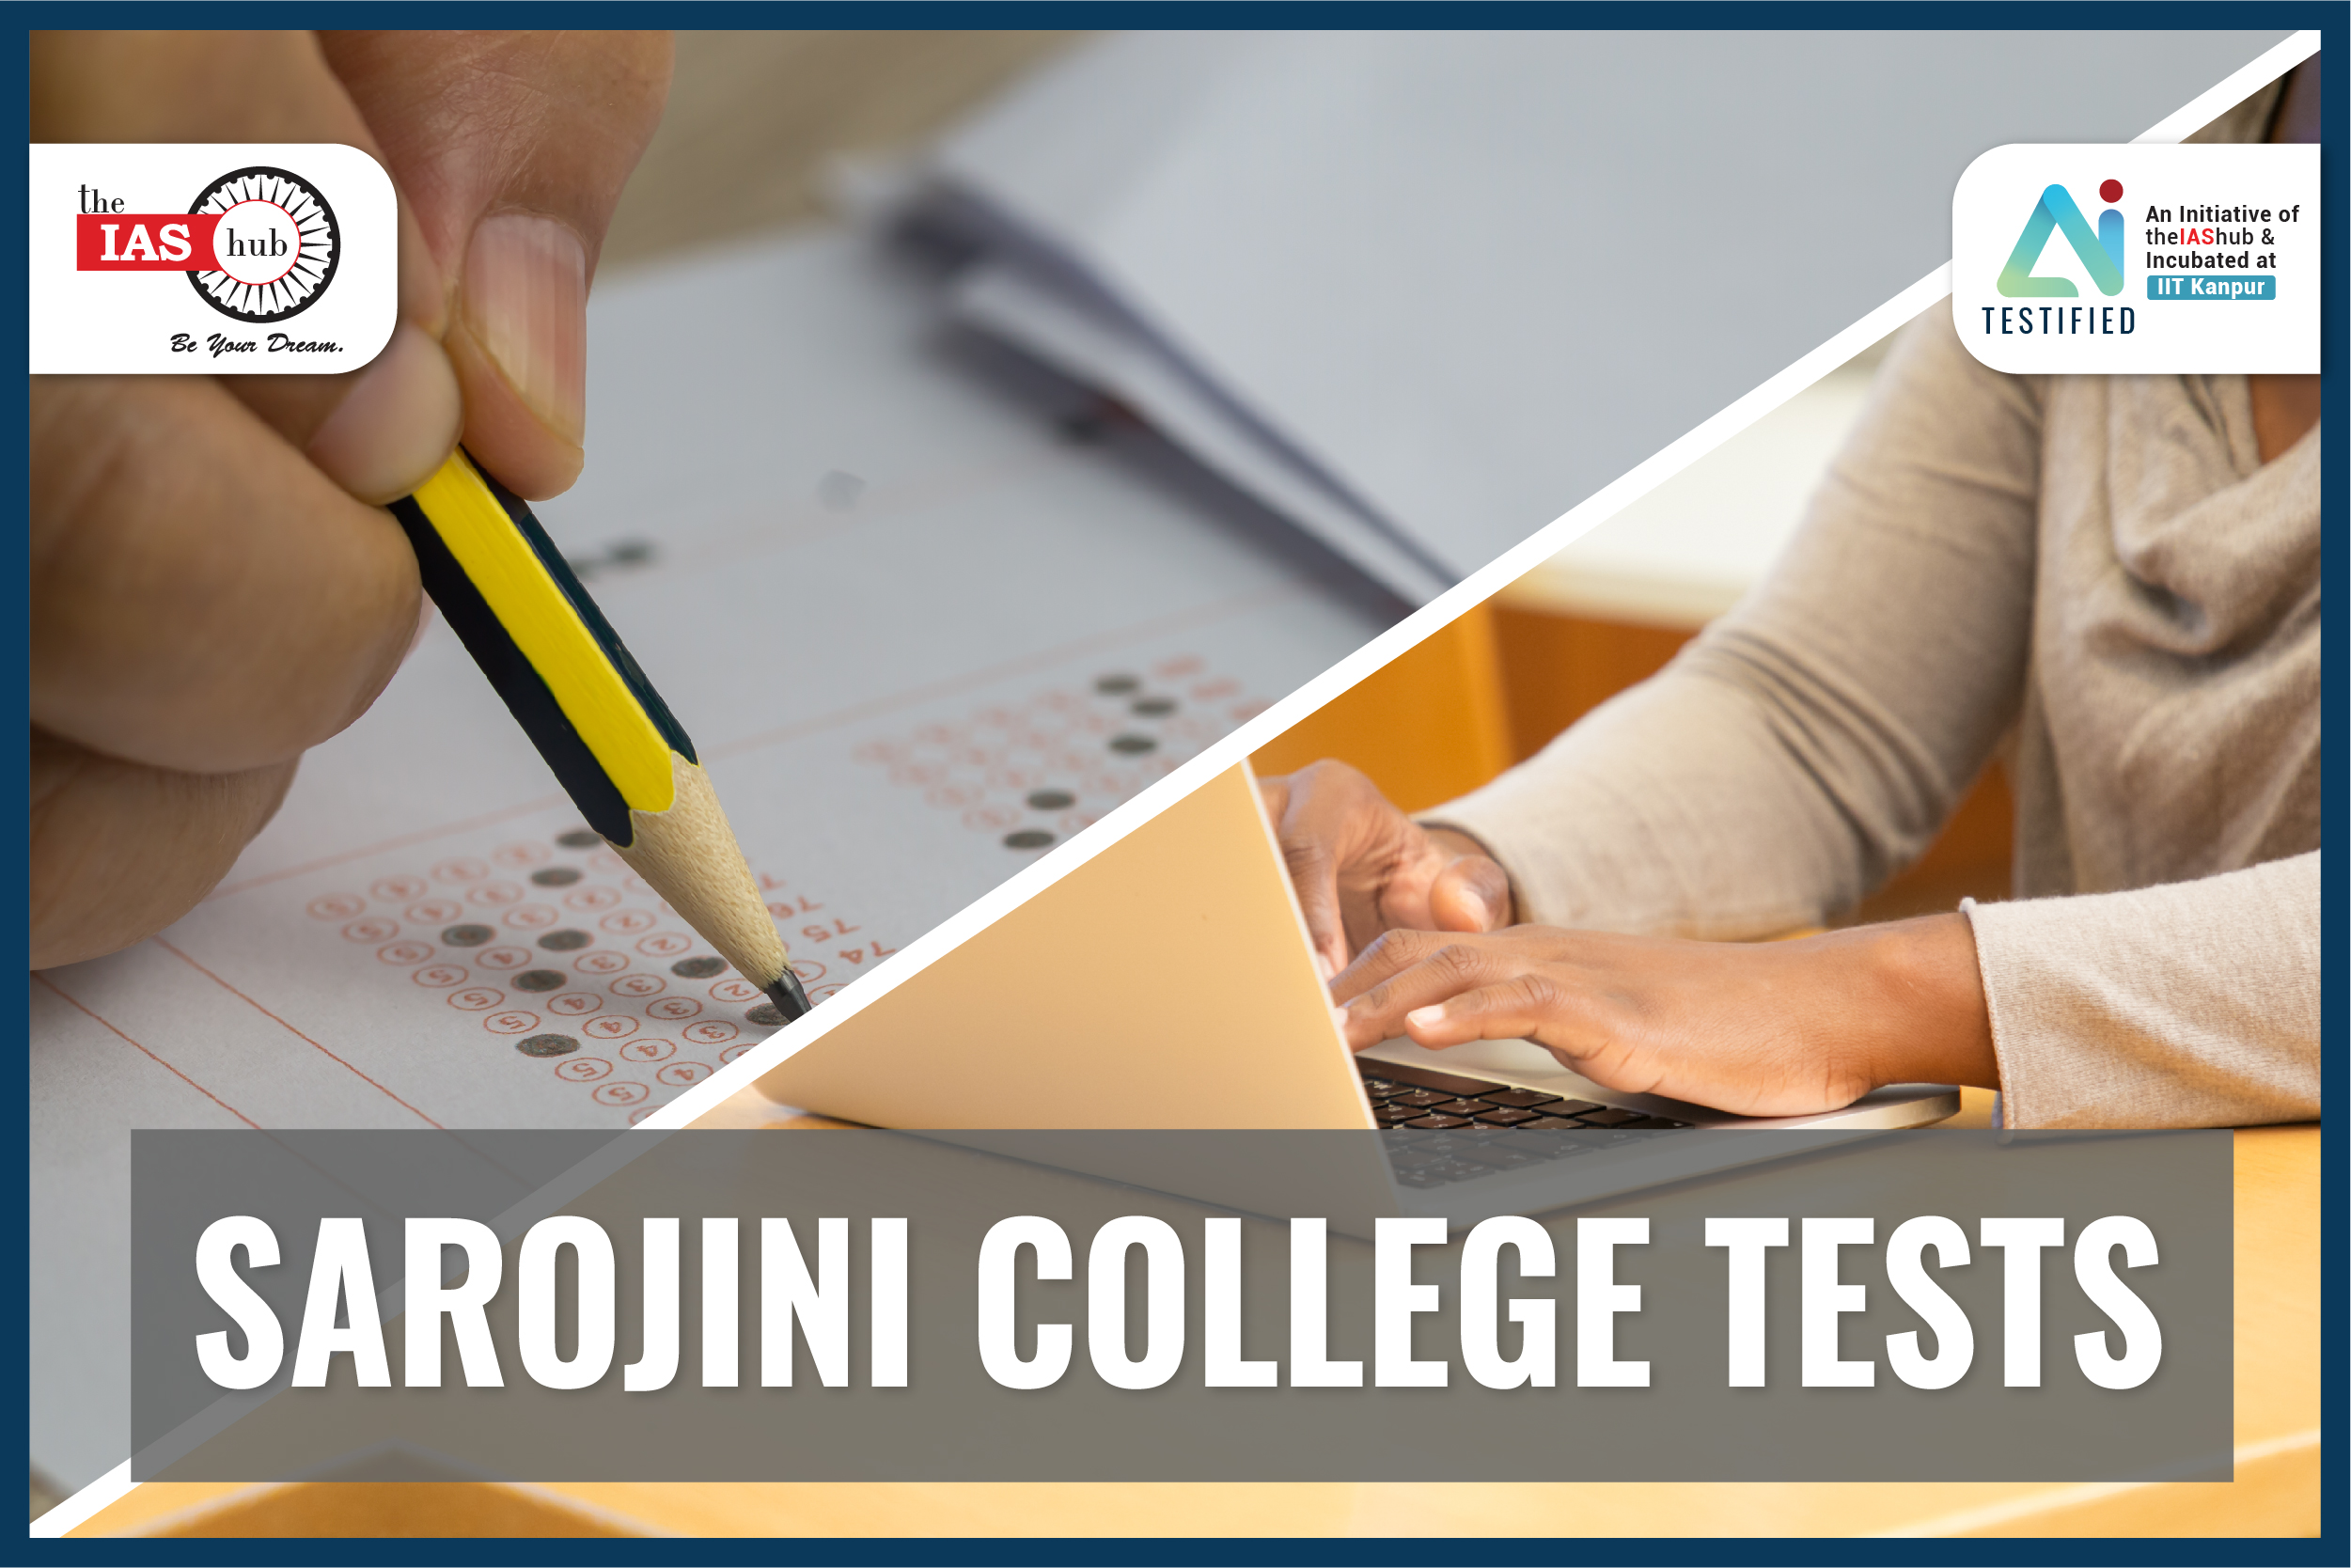 Sarojini College Tests